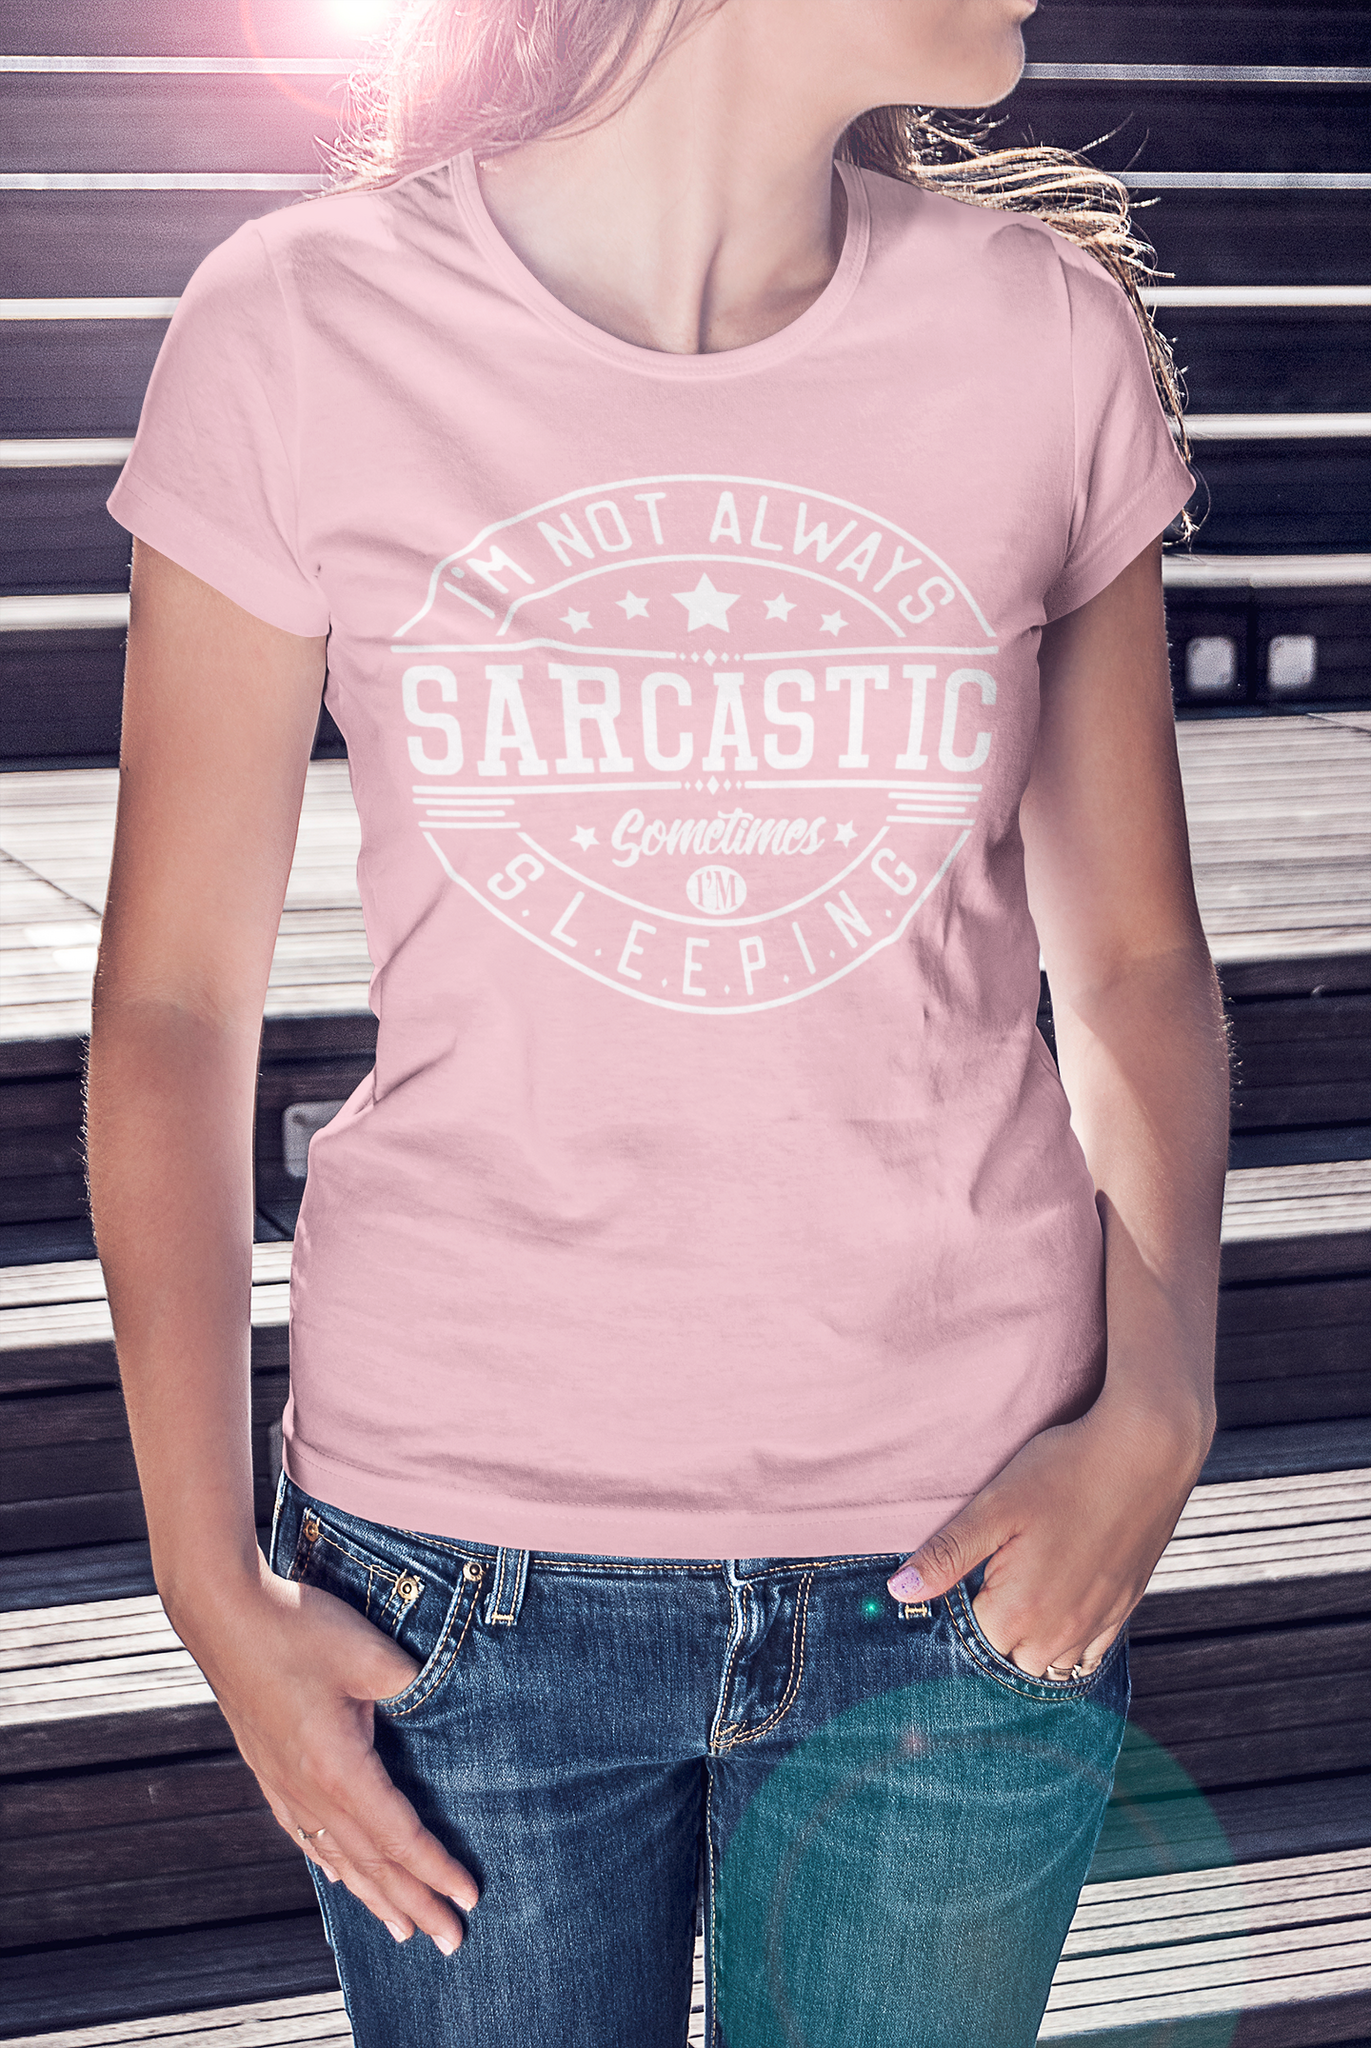 Sarcastic T-Shirt Women